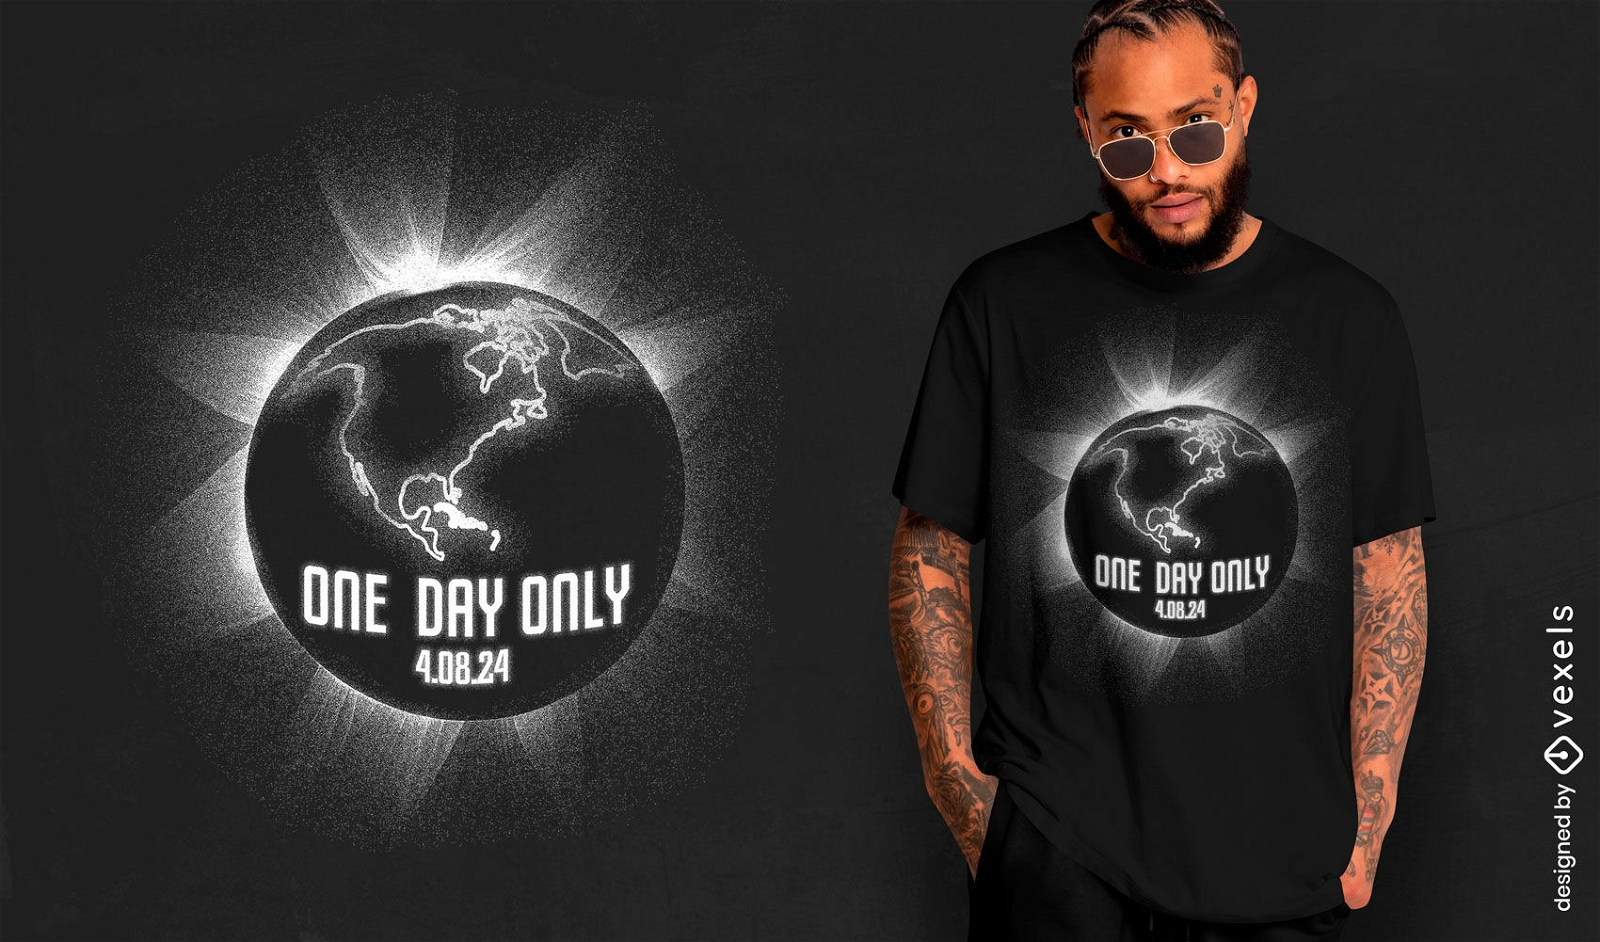 Dise?o de camiseta del evento eclipse total.